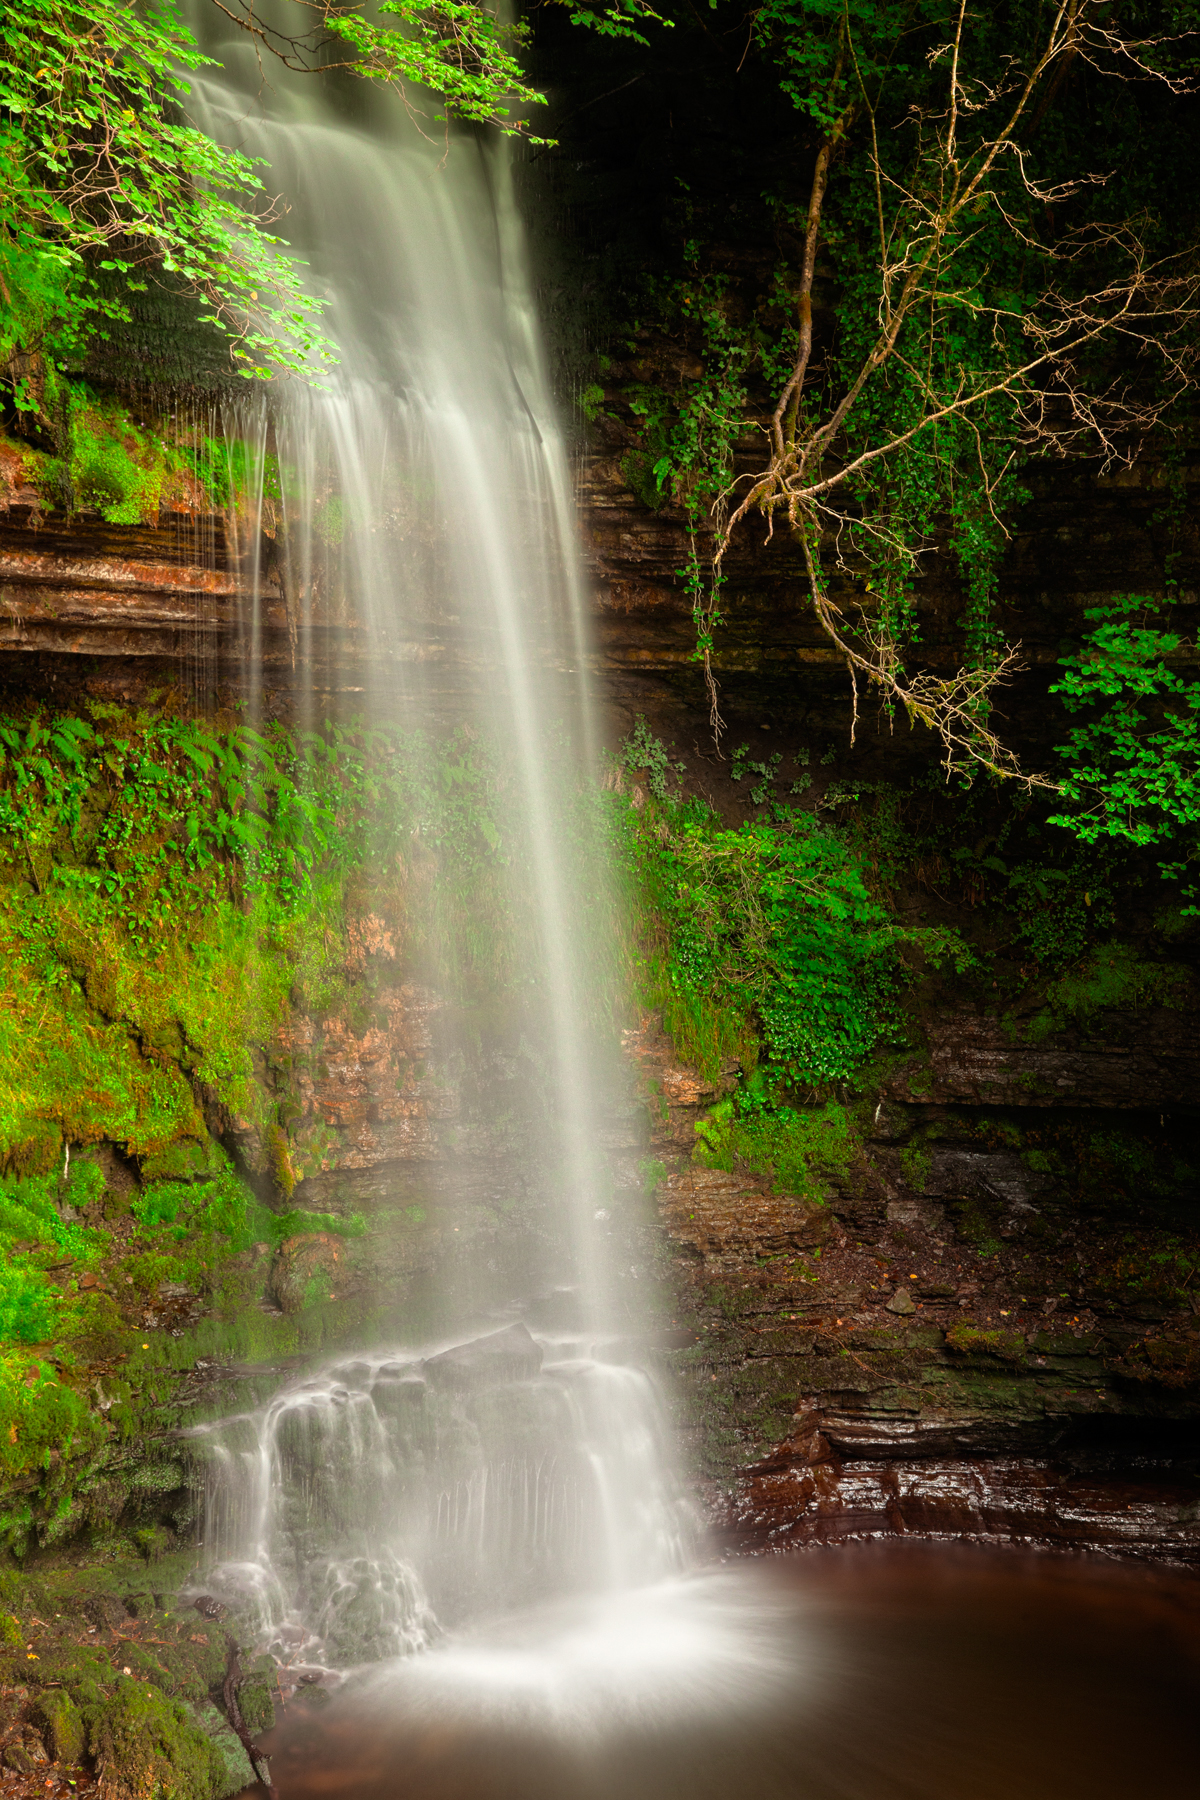 Glencar falls - hdr photo